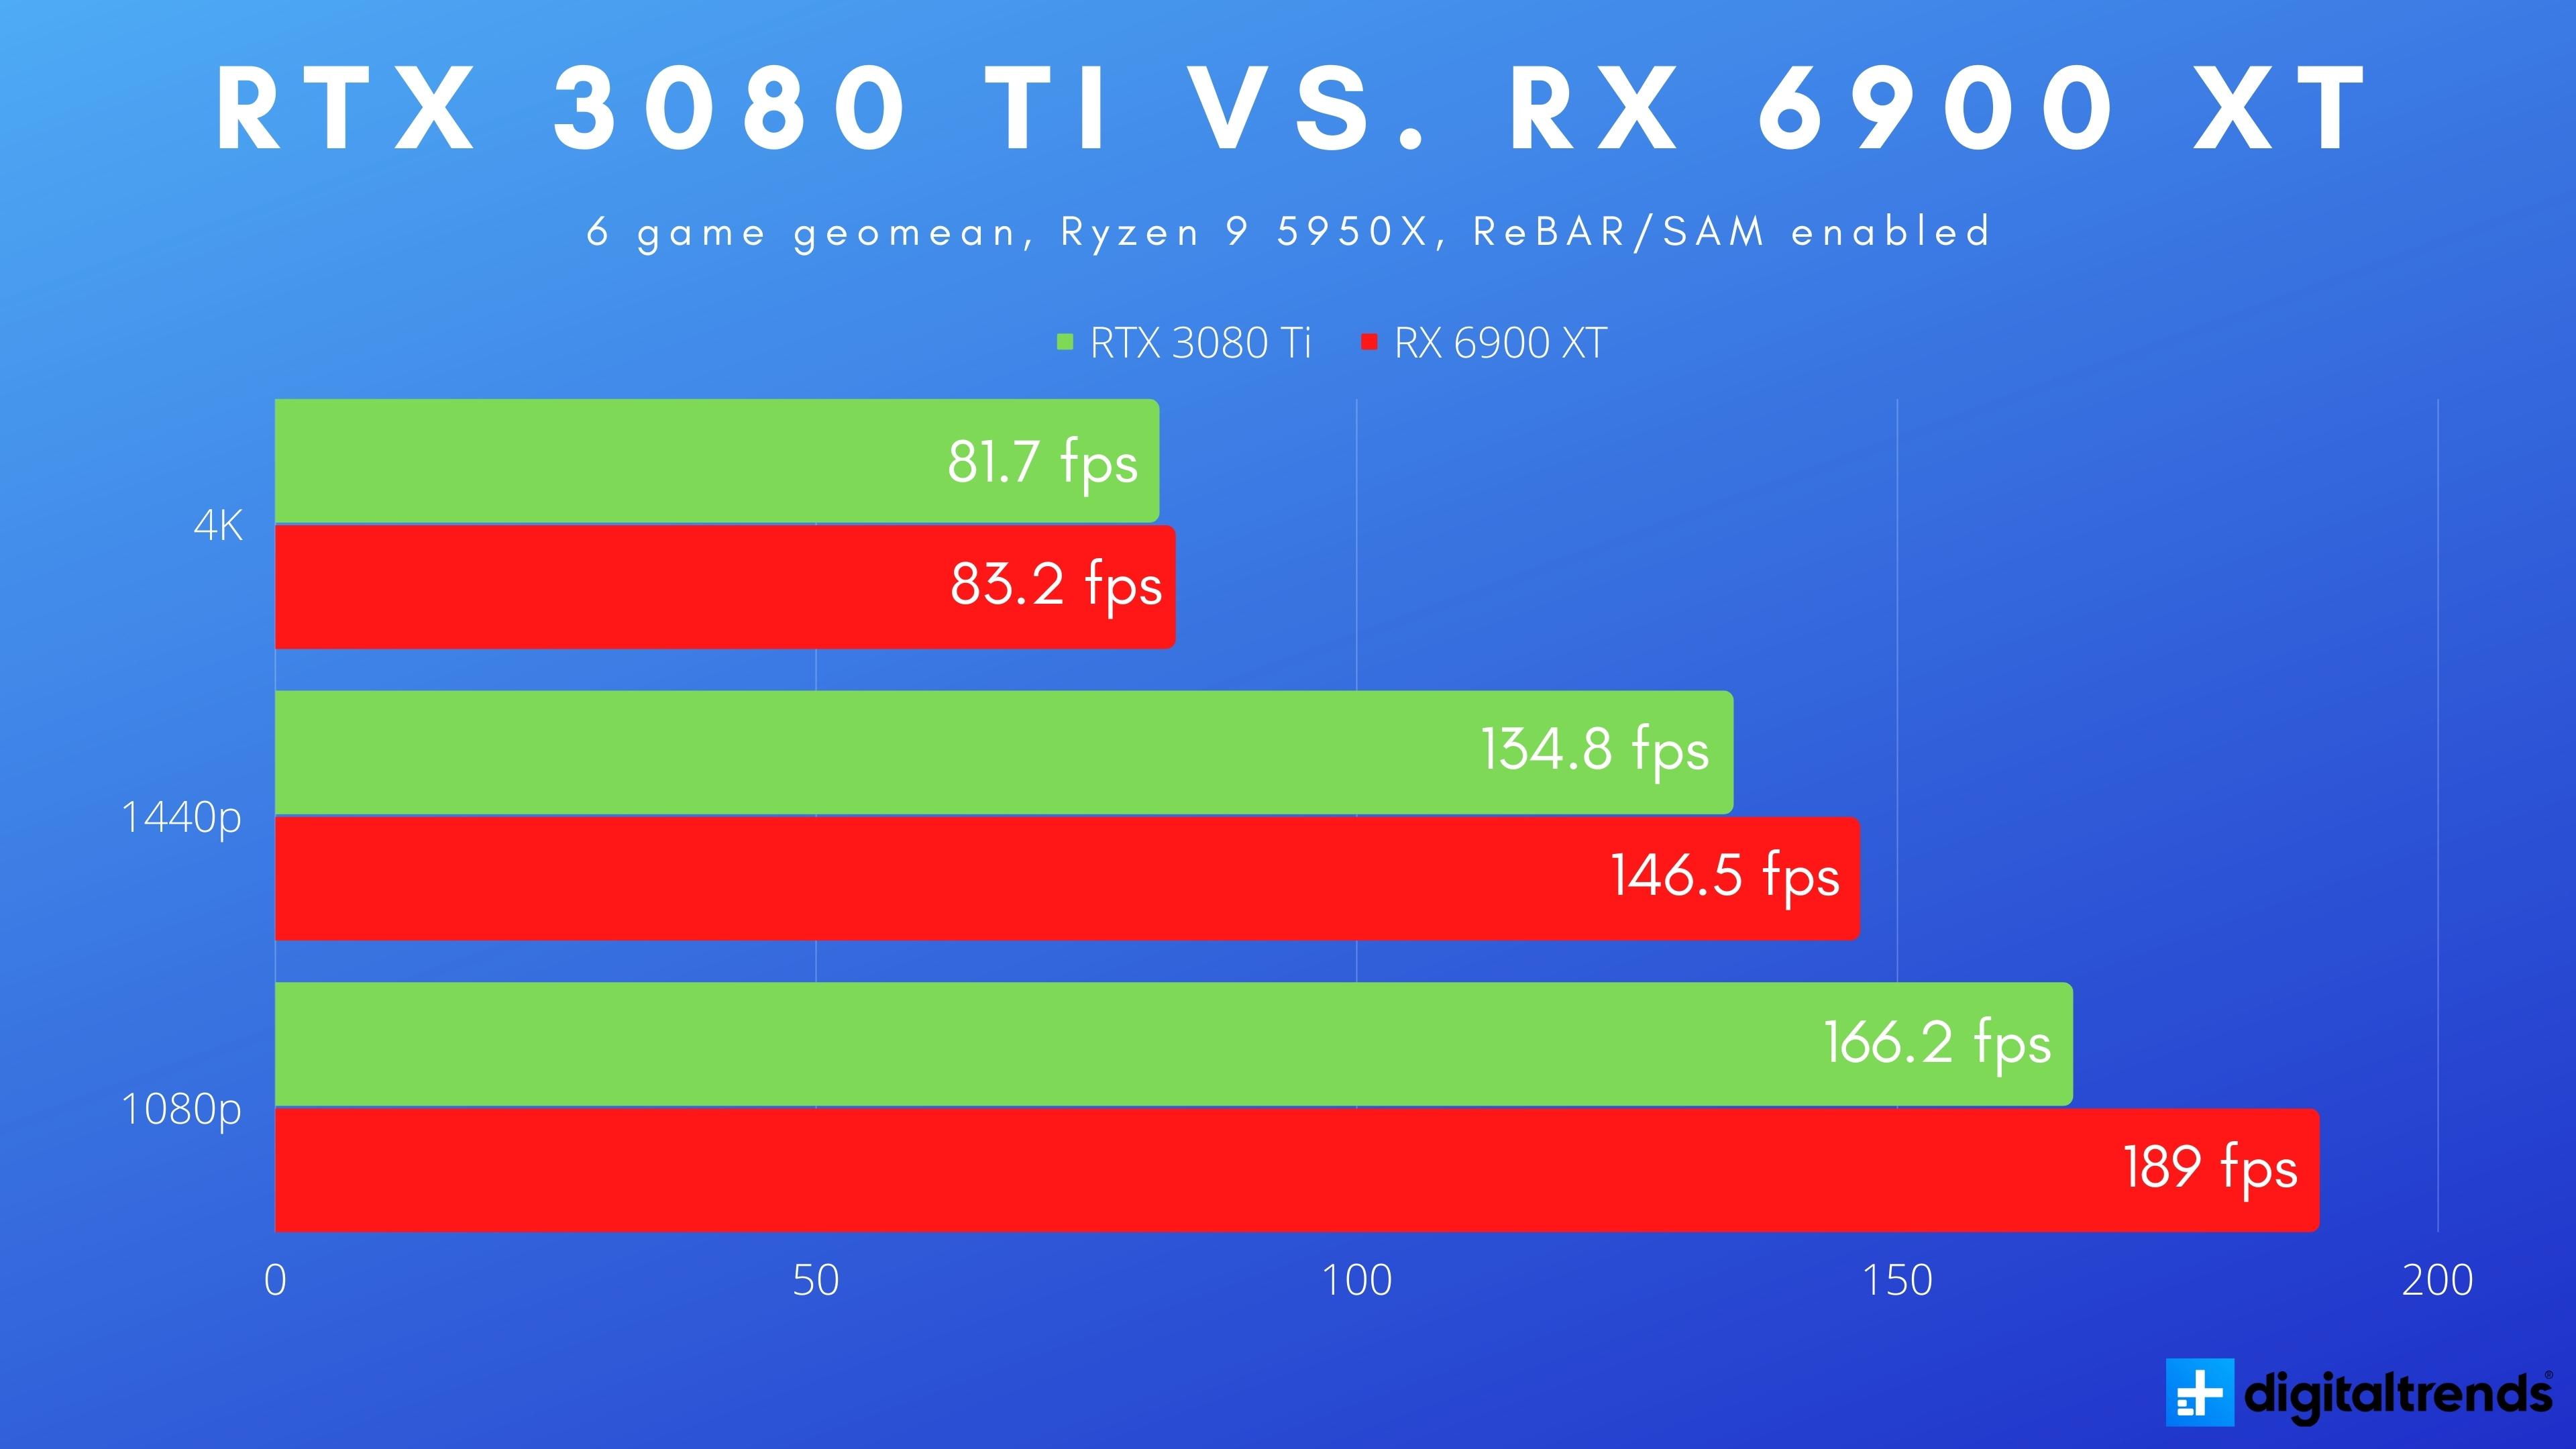 RTX 3080 Ti vs. RX 6800 XT vs. RTX 3080